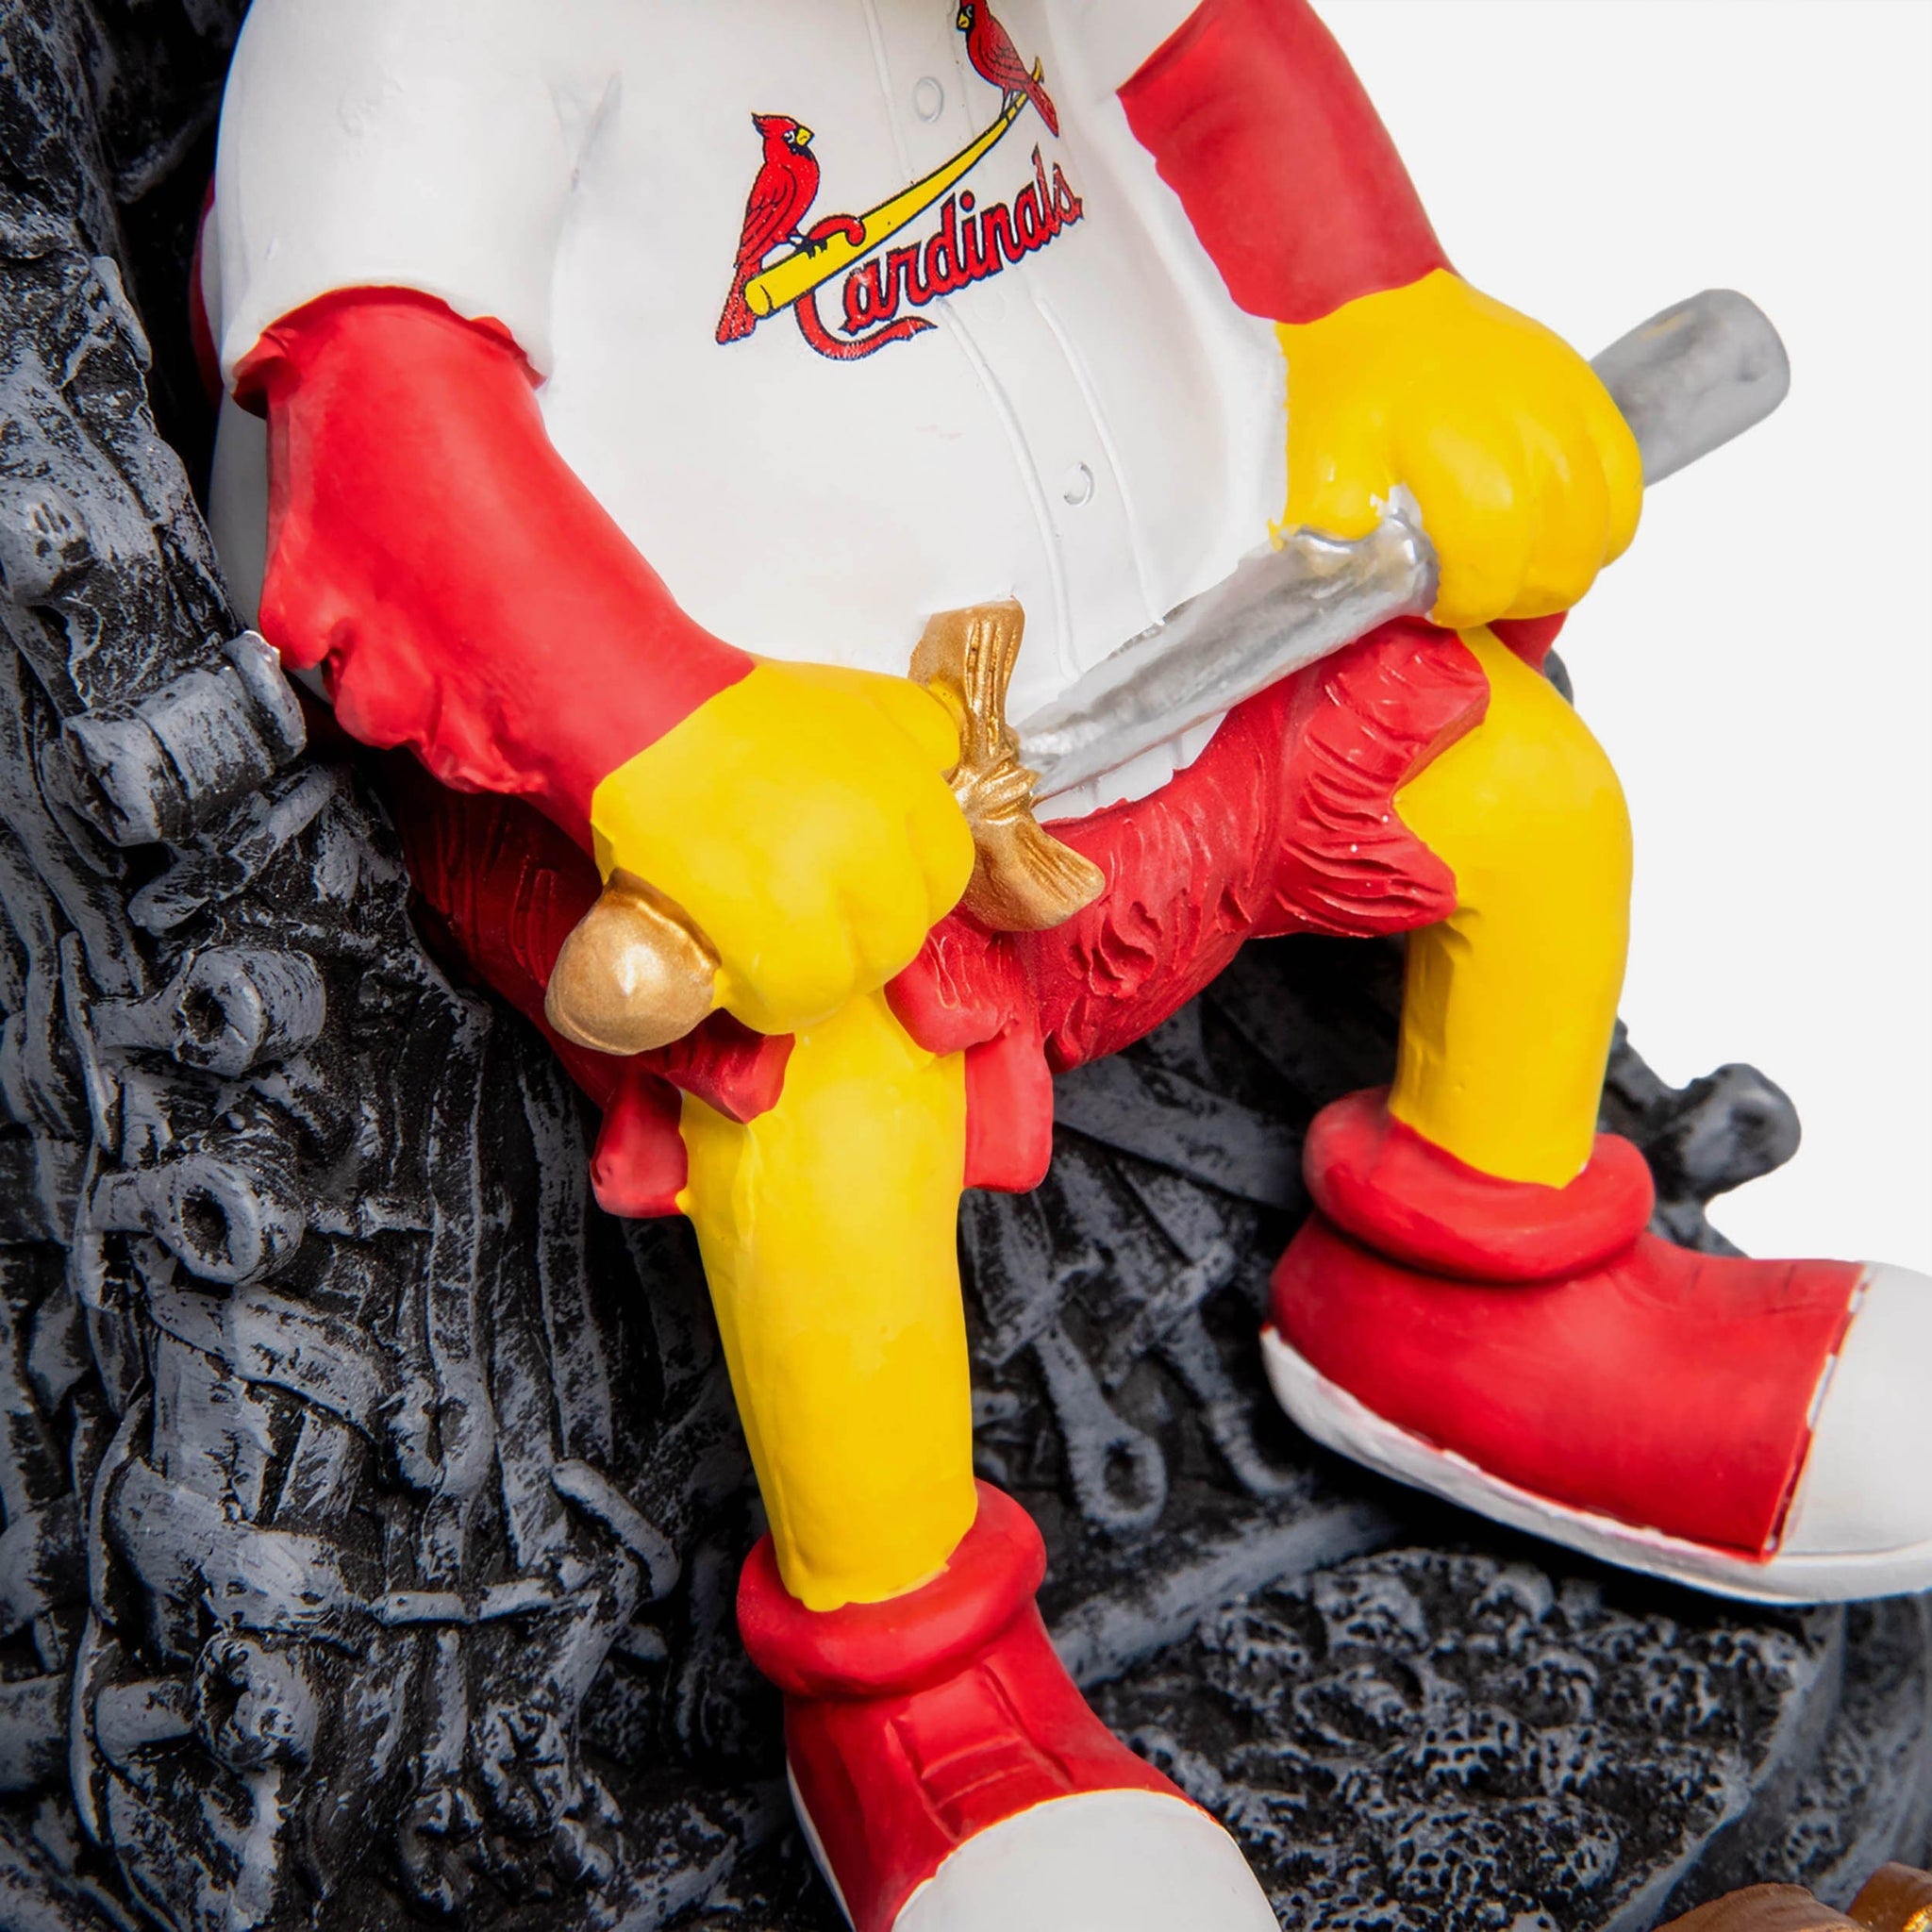 St Louis Cardinals Fredbird Game Of Thrones Mascot Bobblehead FOCO